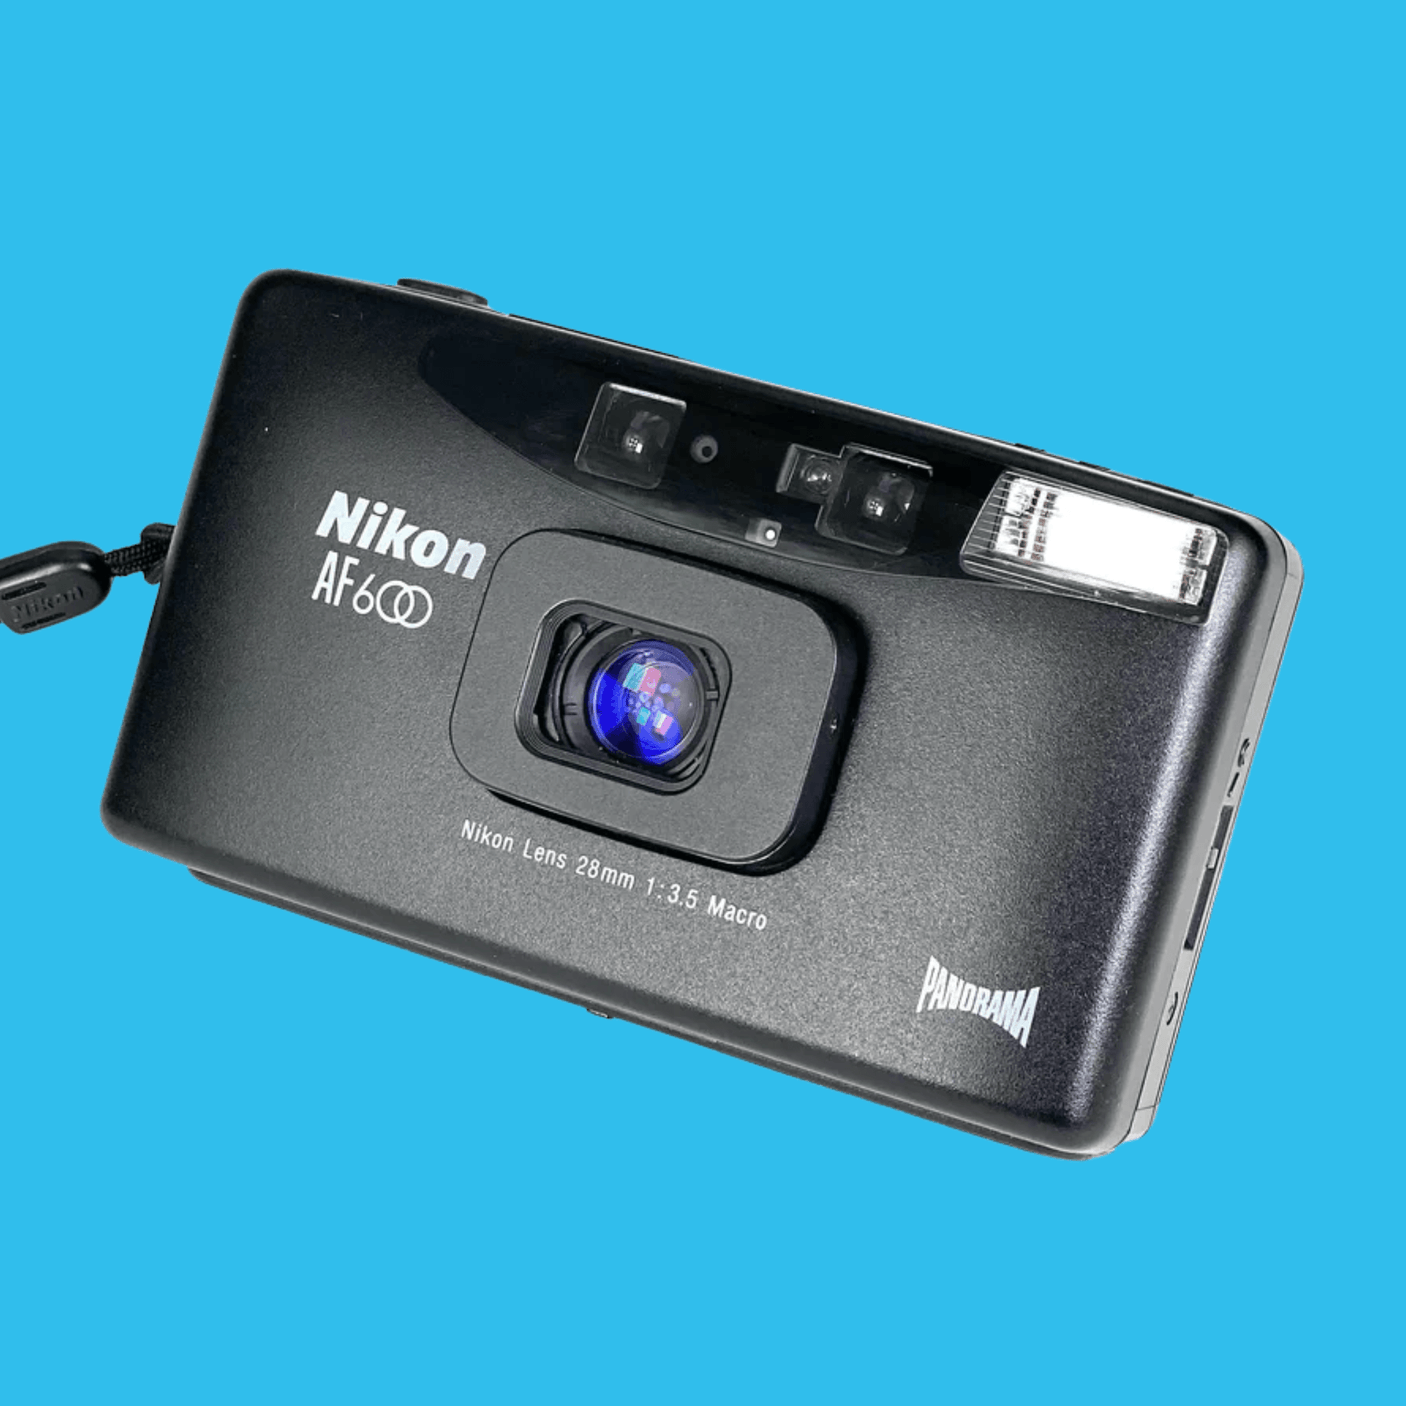 Nikon AF 600 35mm Film Camera Point and Shoot